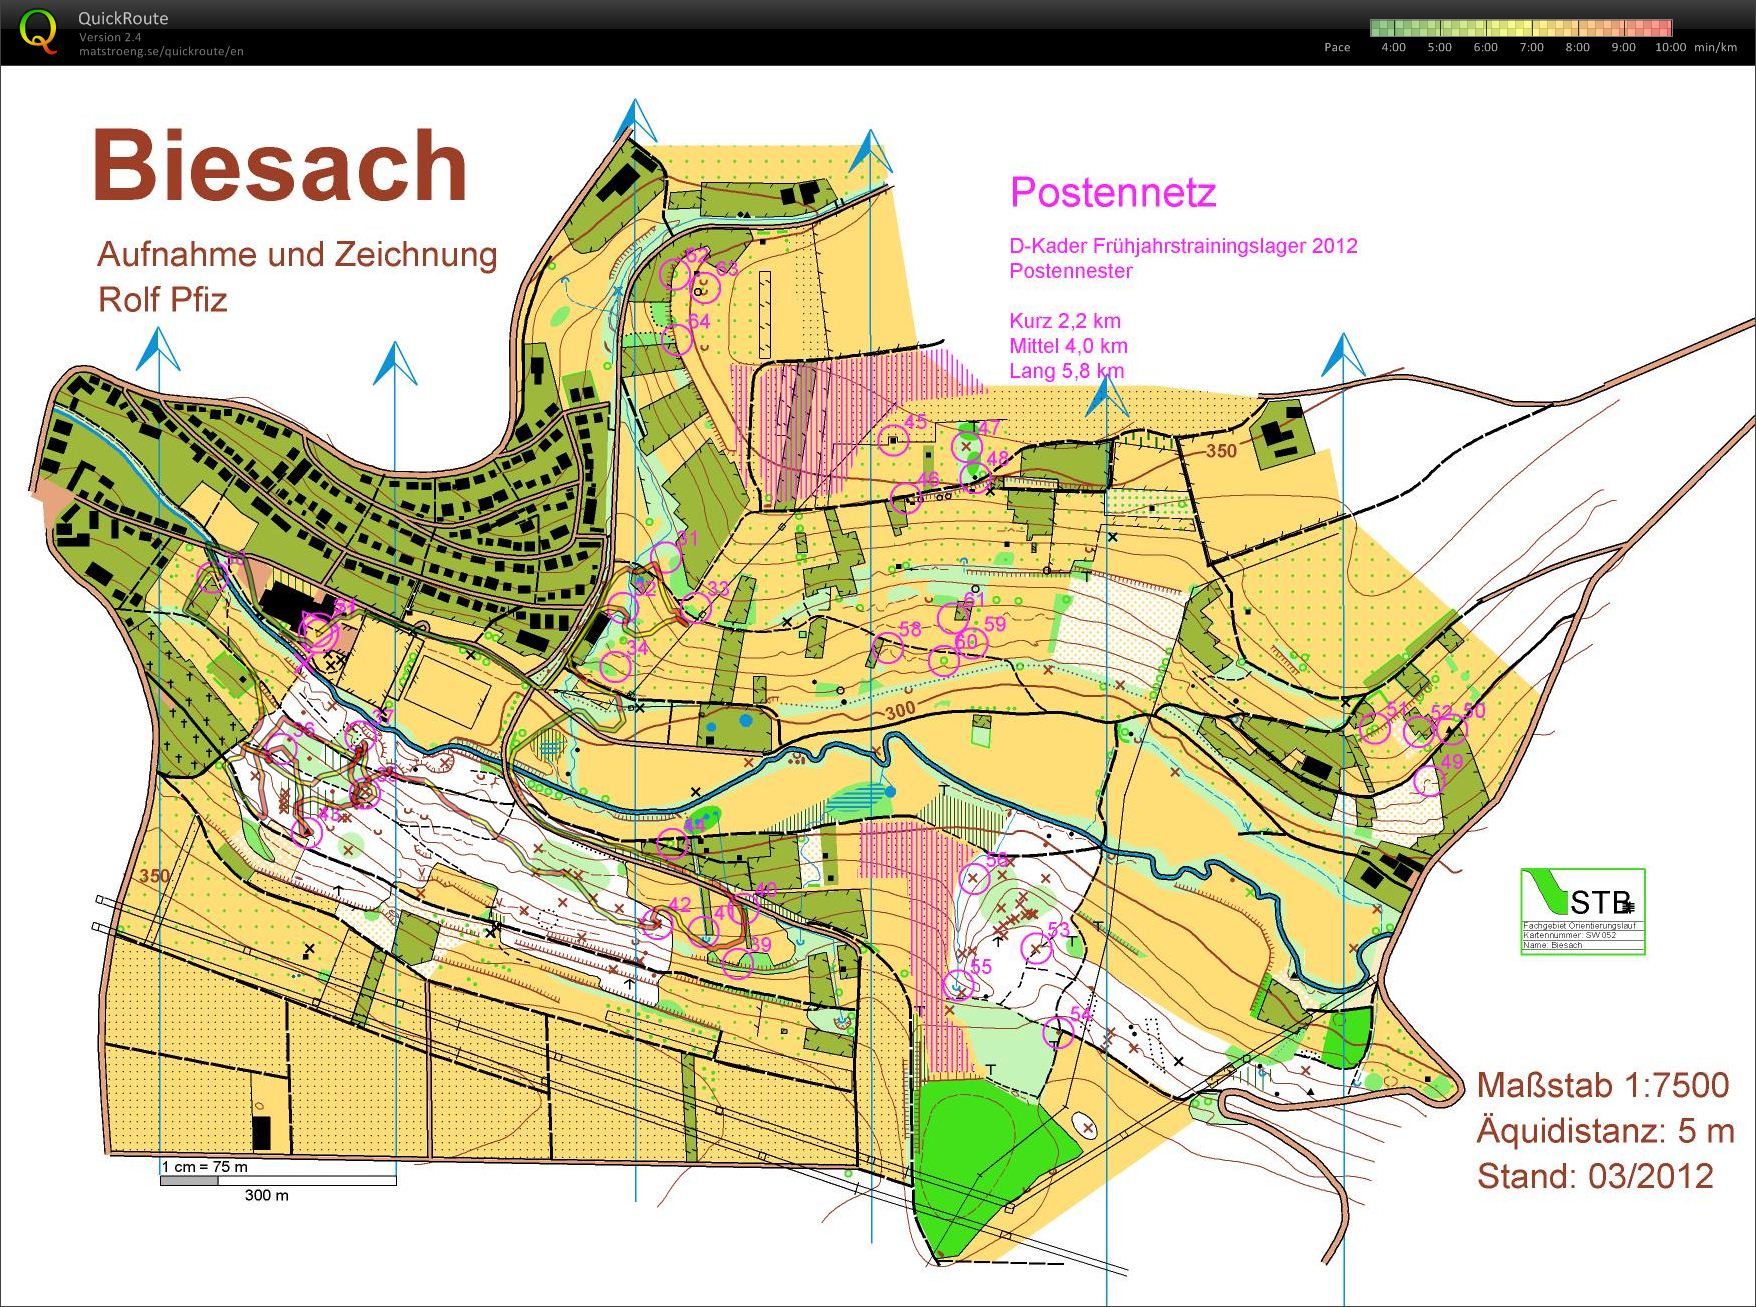 Training Biesach (Schatten) (2012-03-24)